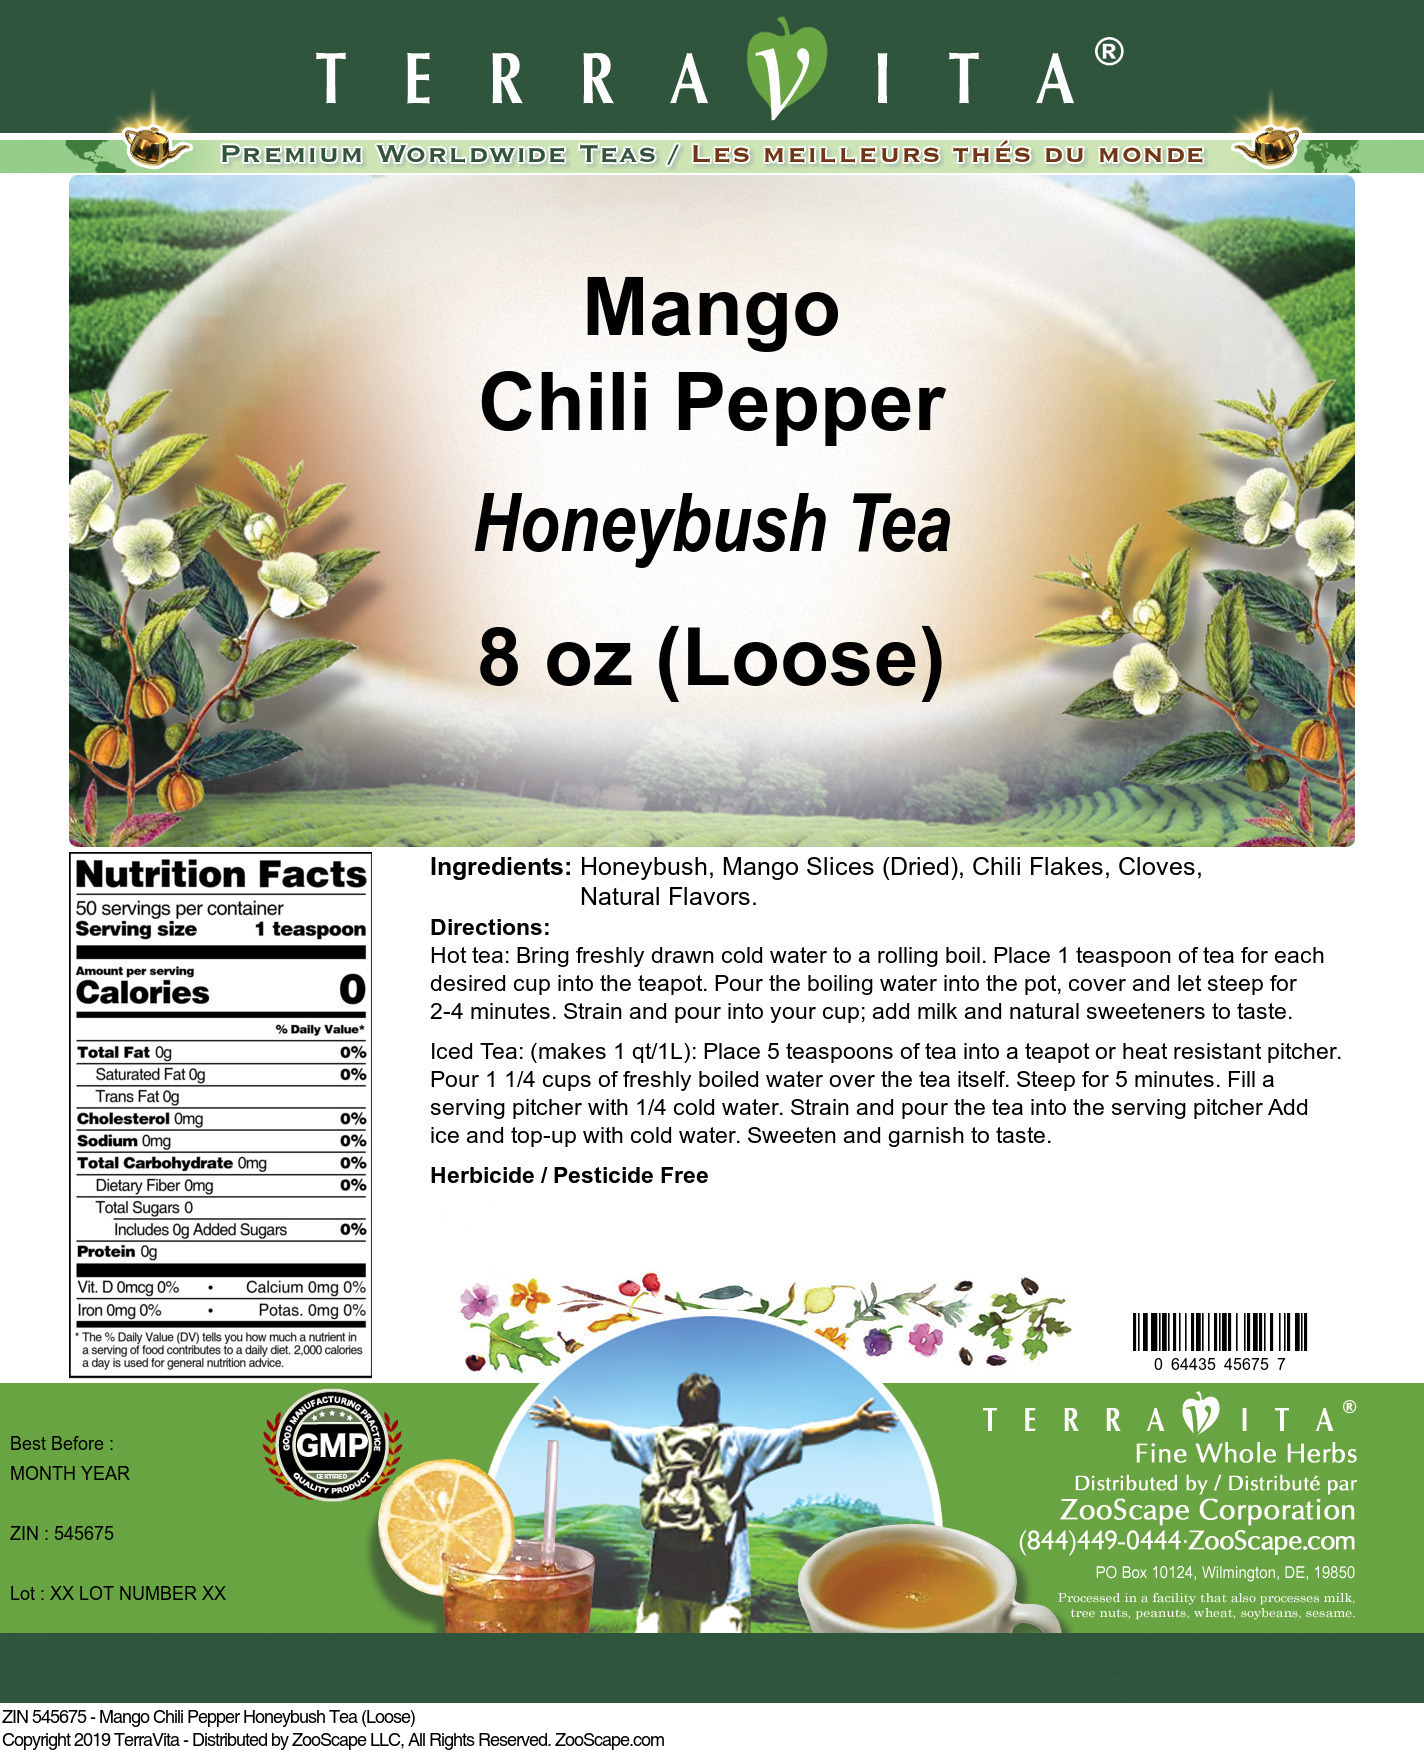 Mango Chili Pepper Honeybush Tea (Loose) - Label